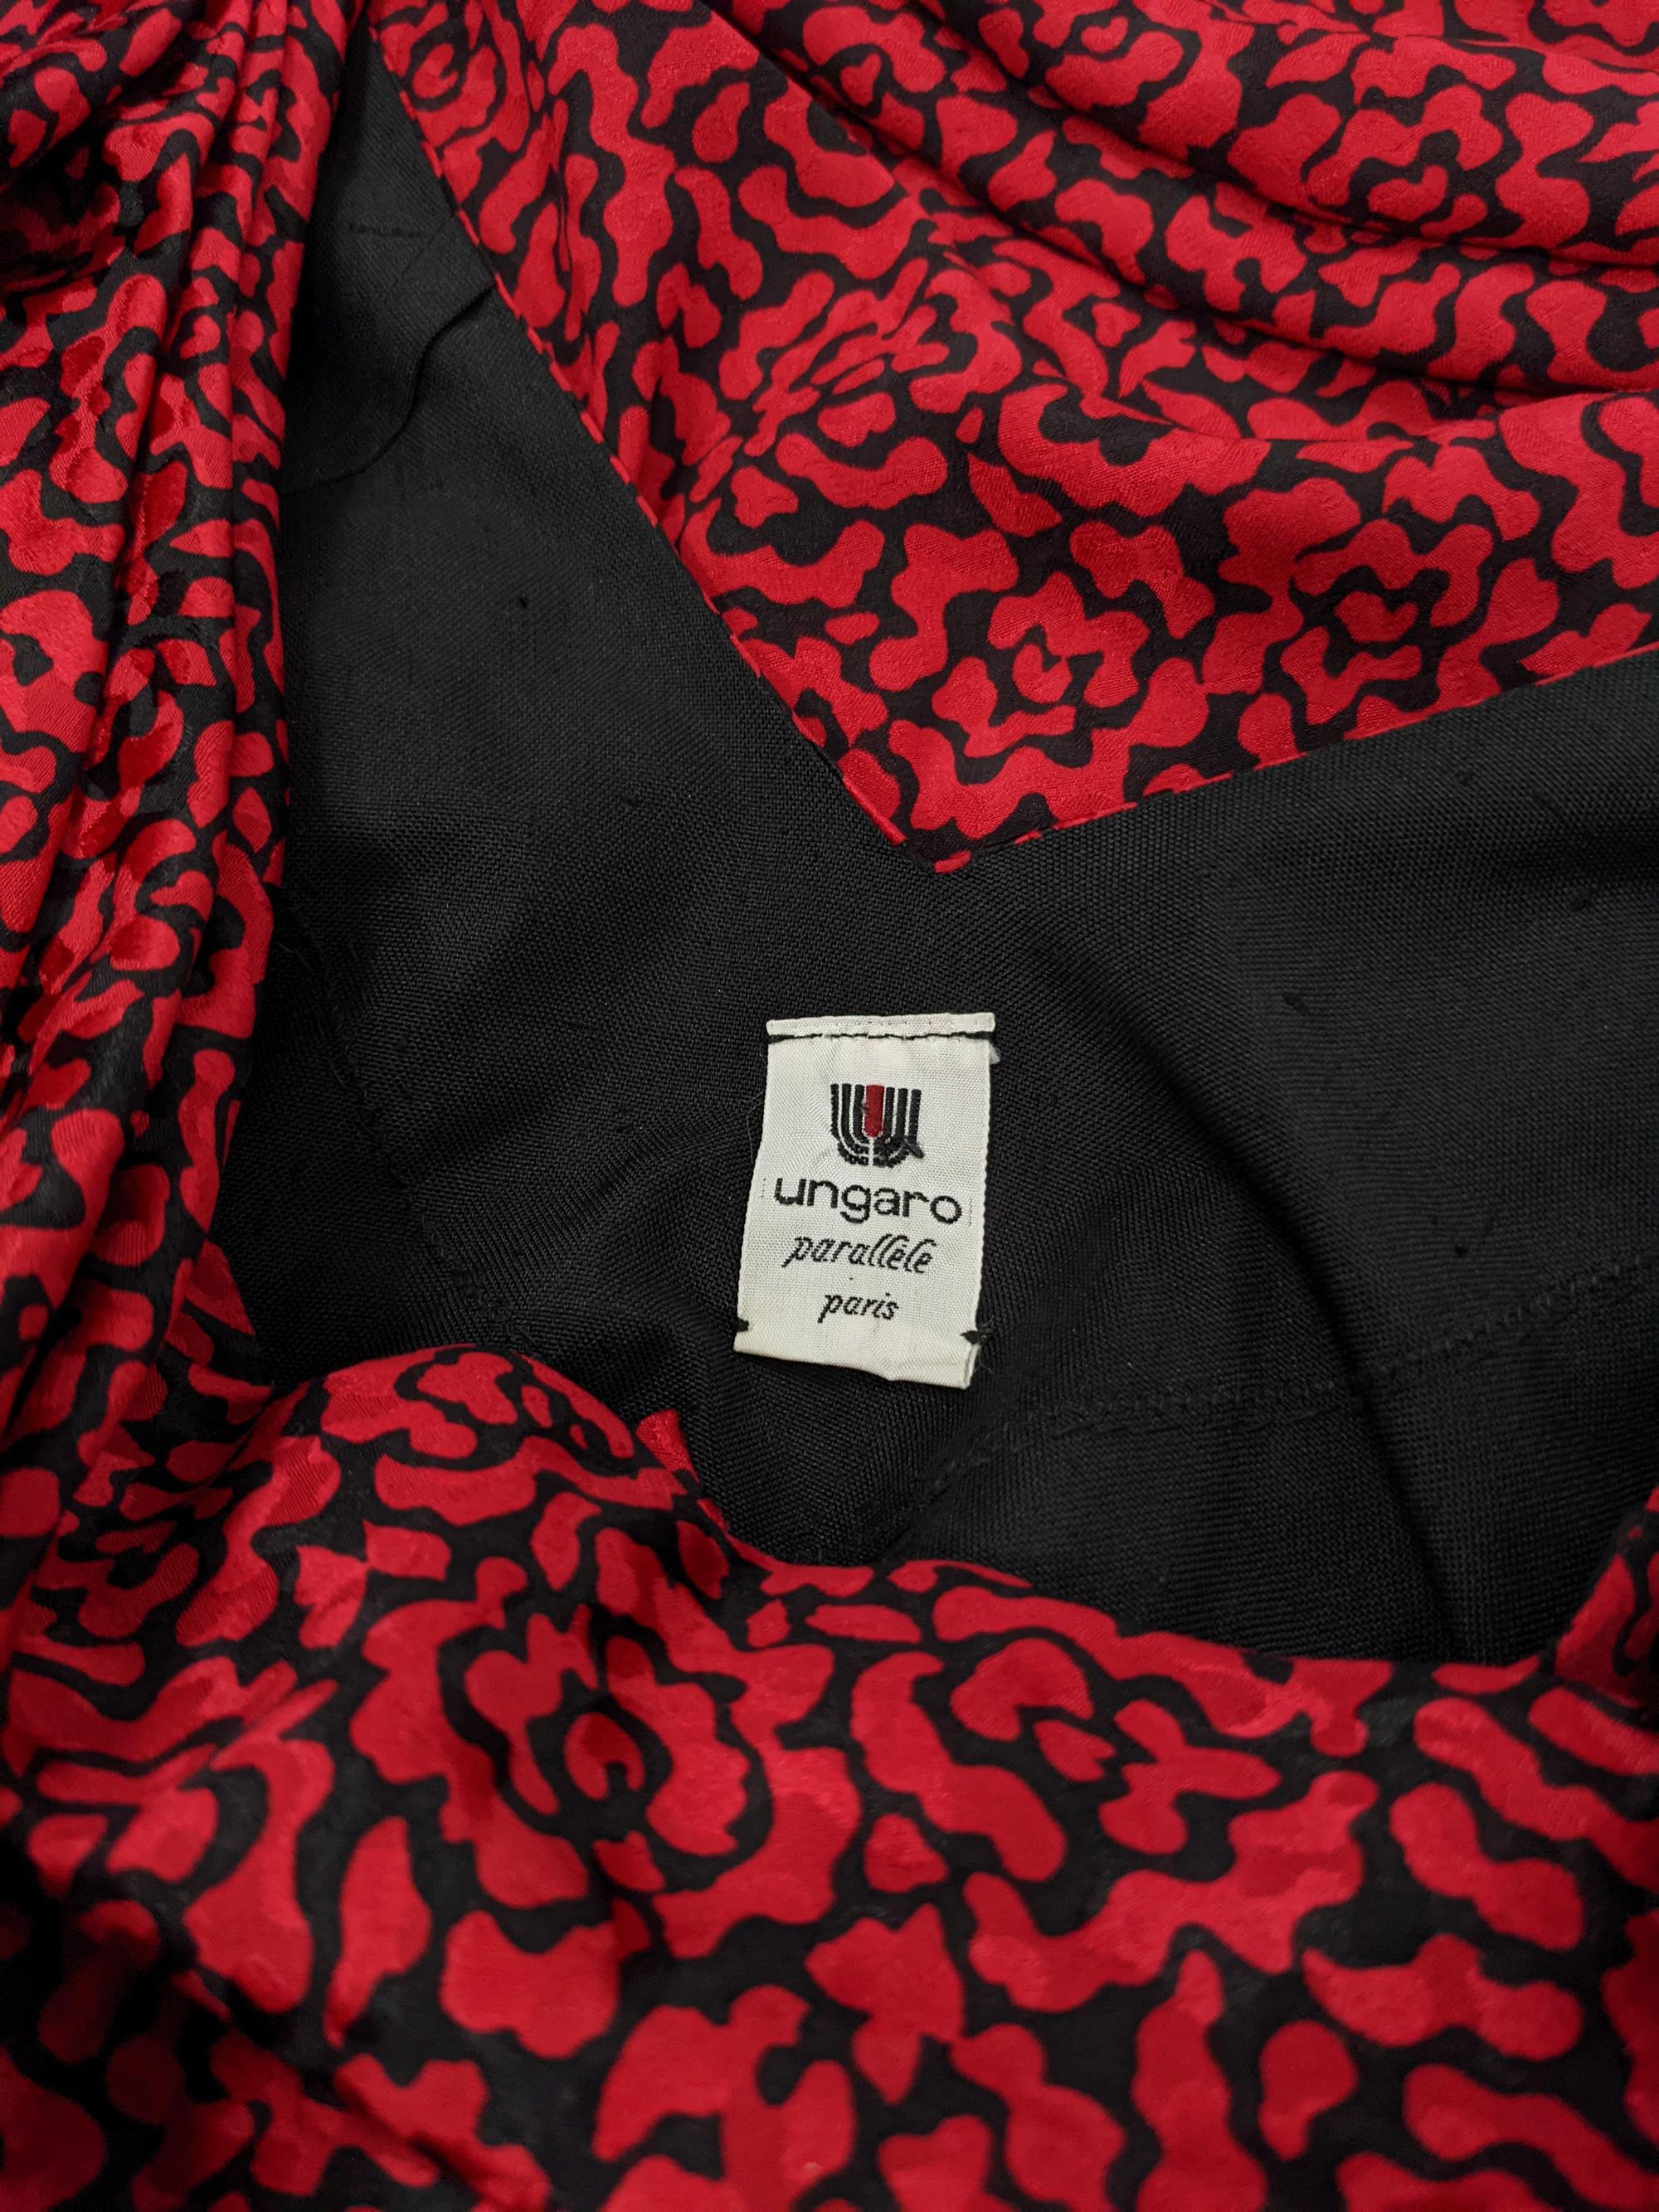 Emanuel Ungaro Vintage Red & Black Draped Ruched Silk Party Evening Dress, 1980s For Sale 4